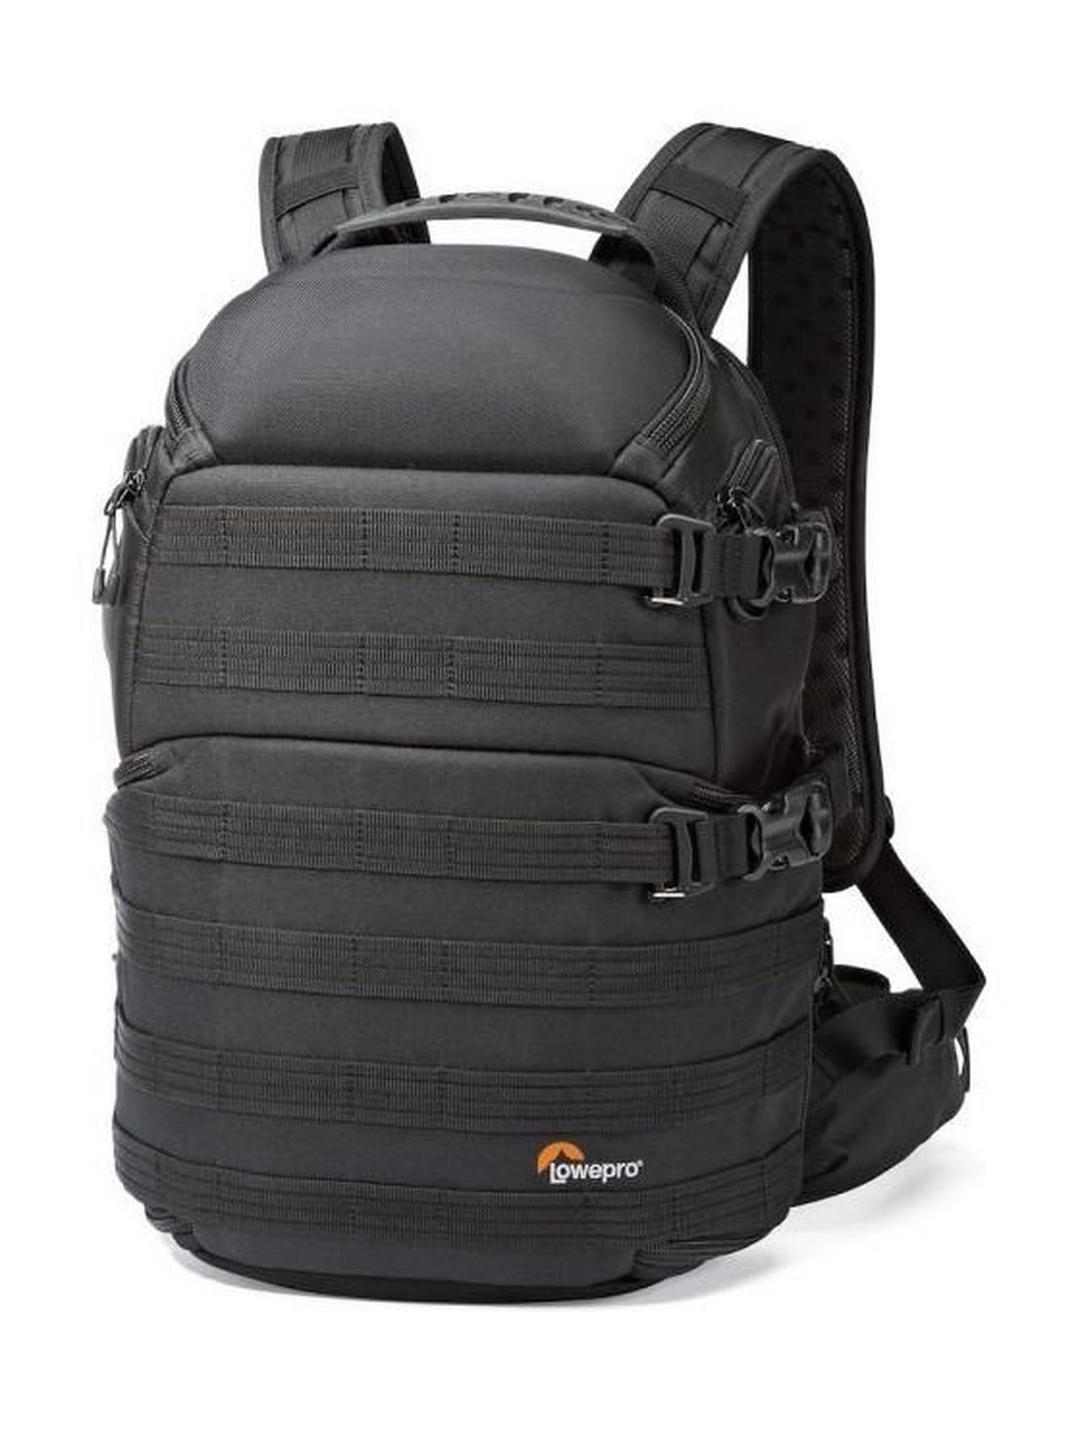 Lowepro Protactic 350 AW DSLR Camera Backpack - Black